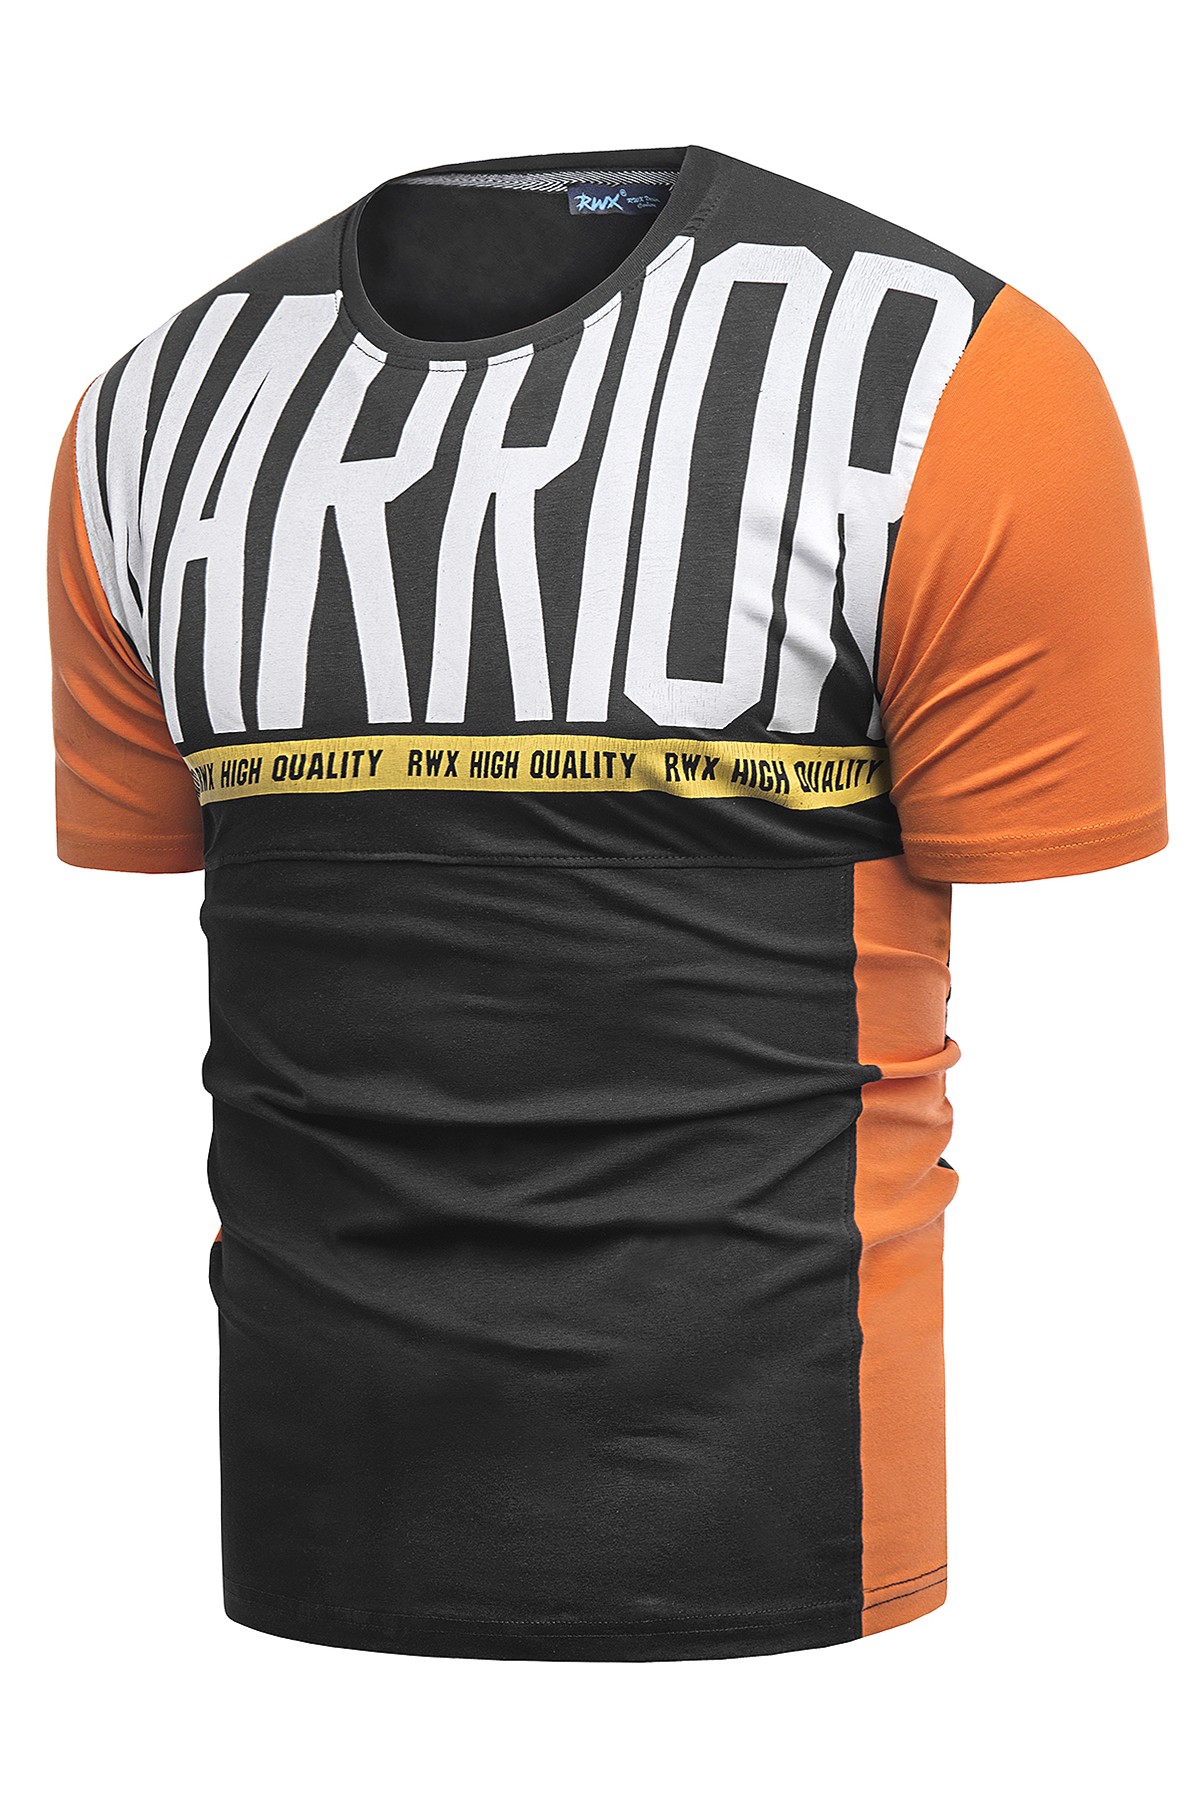 Męska koszulka t-shirt 2072 - czarny / pomarańczowy